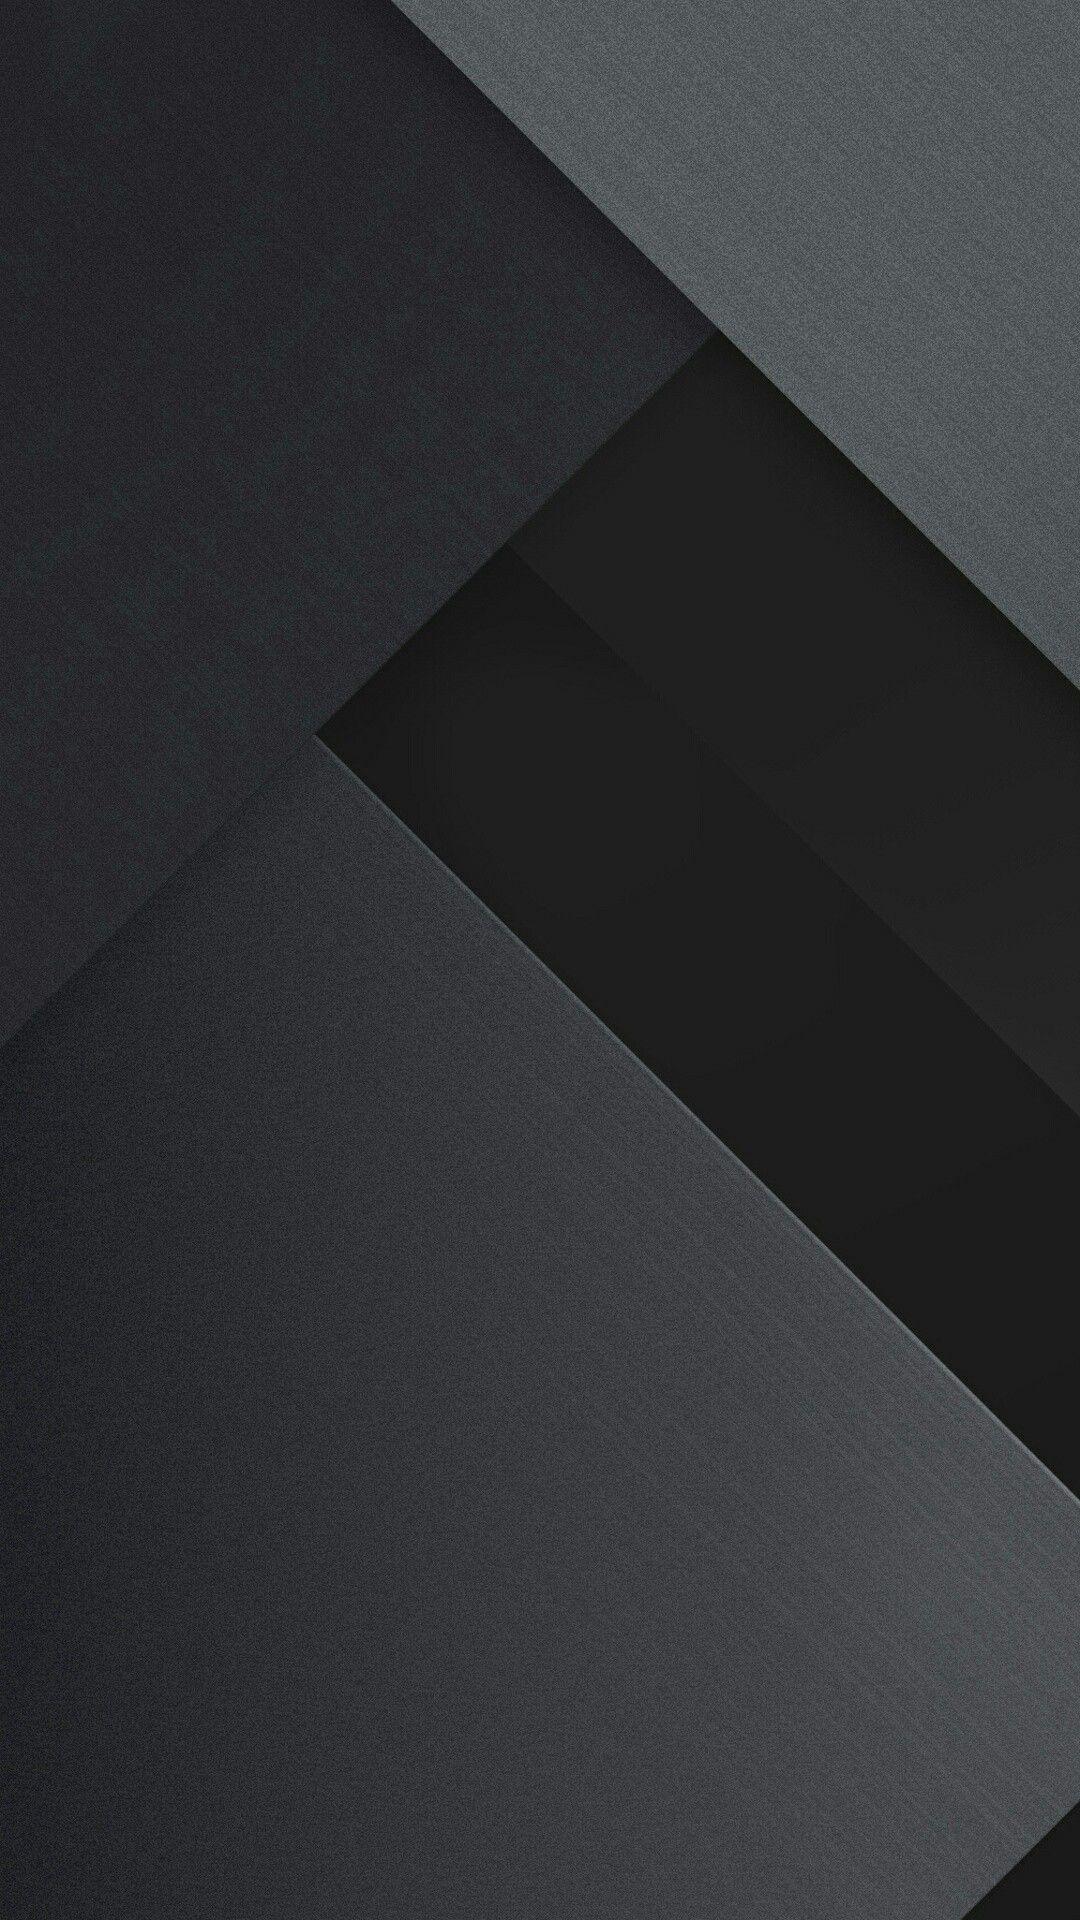 6200 Dark Gray Background Texture Illustrations RoyaltyFree Vector  Graphics  Clip Art  iStock  Grunge wallpaper Dark background